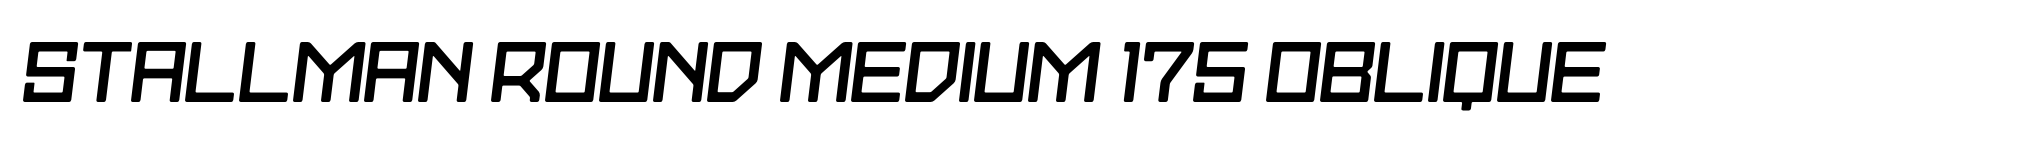 Stallman Round Medium 175 Oblique image